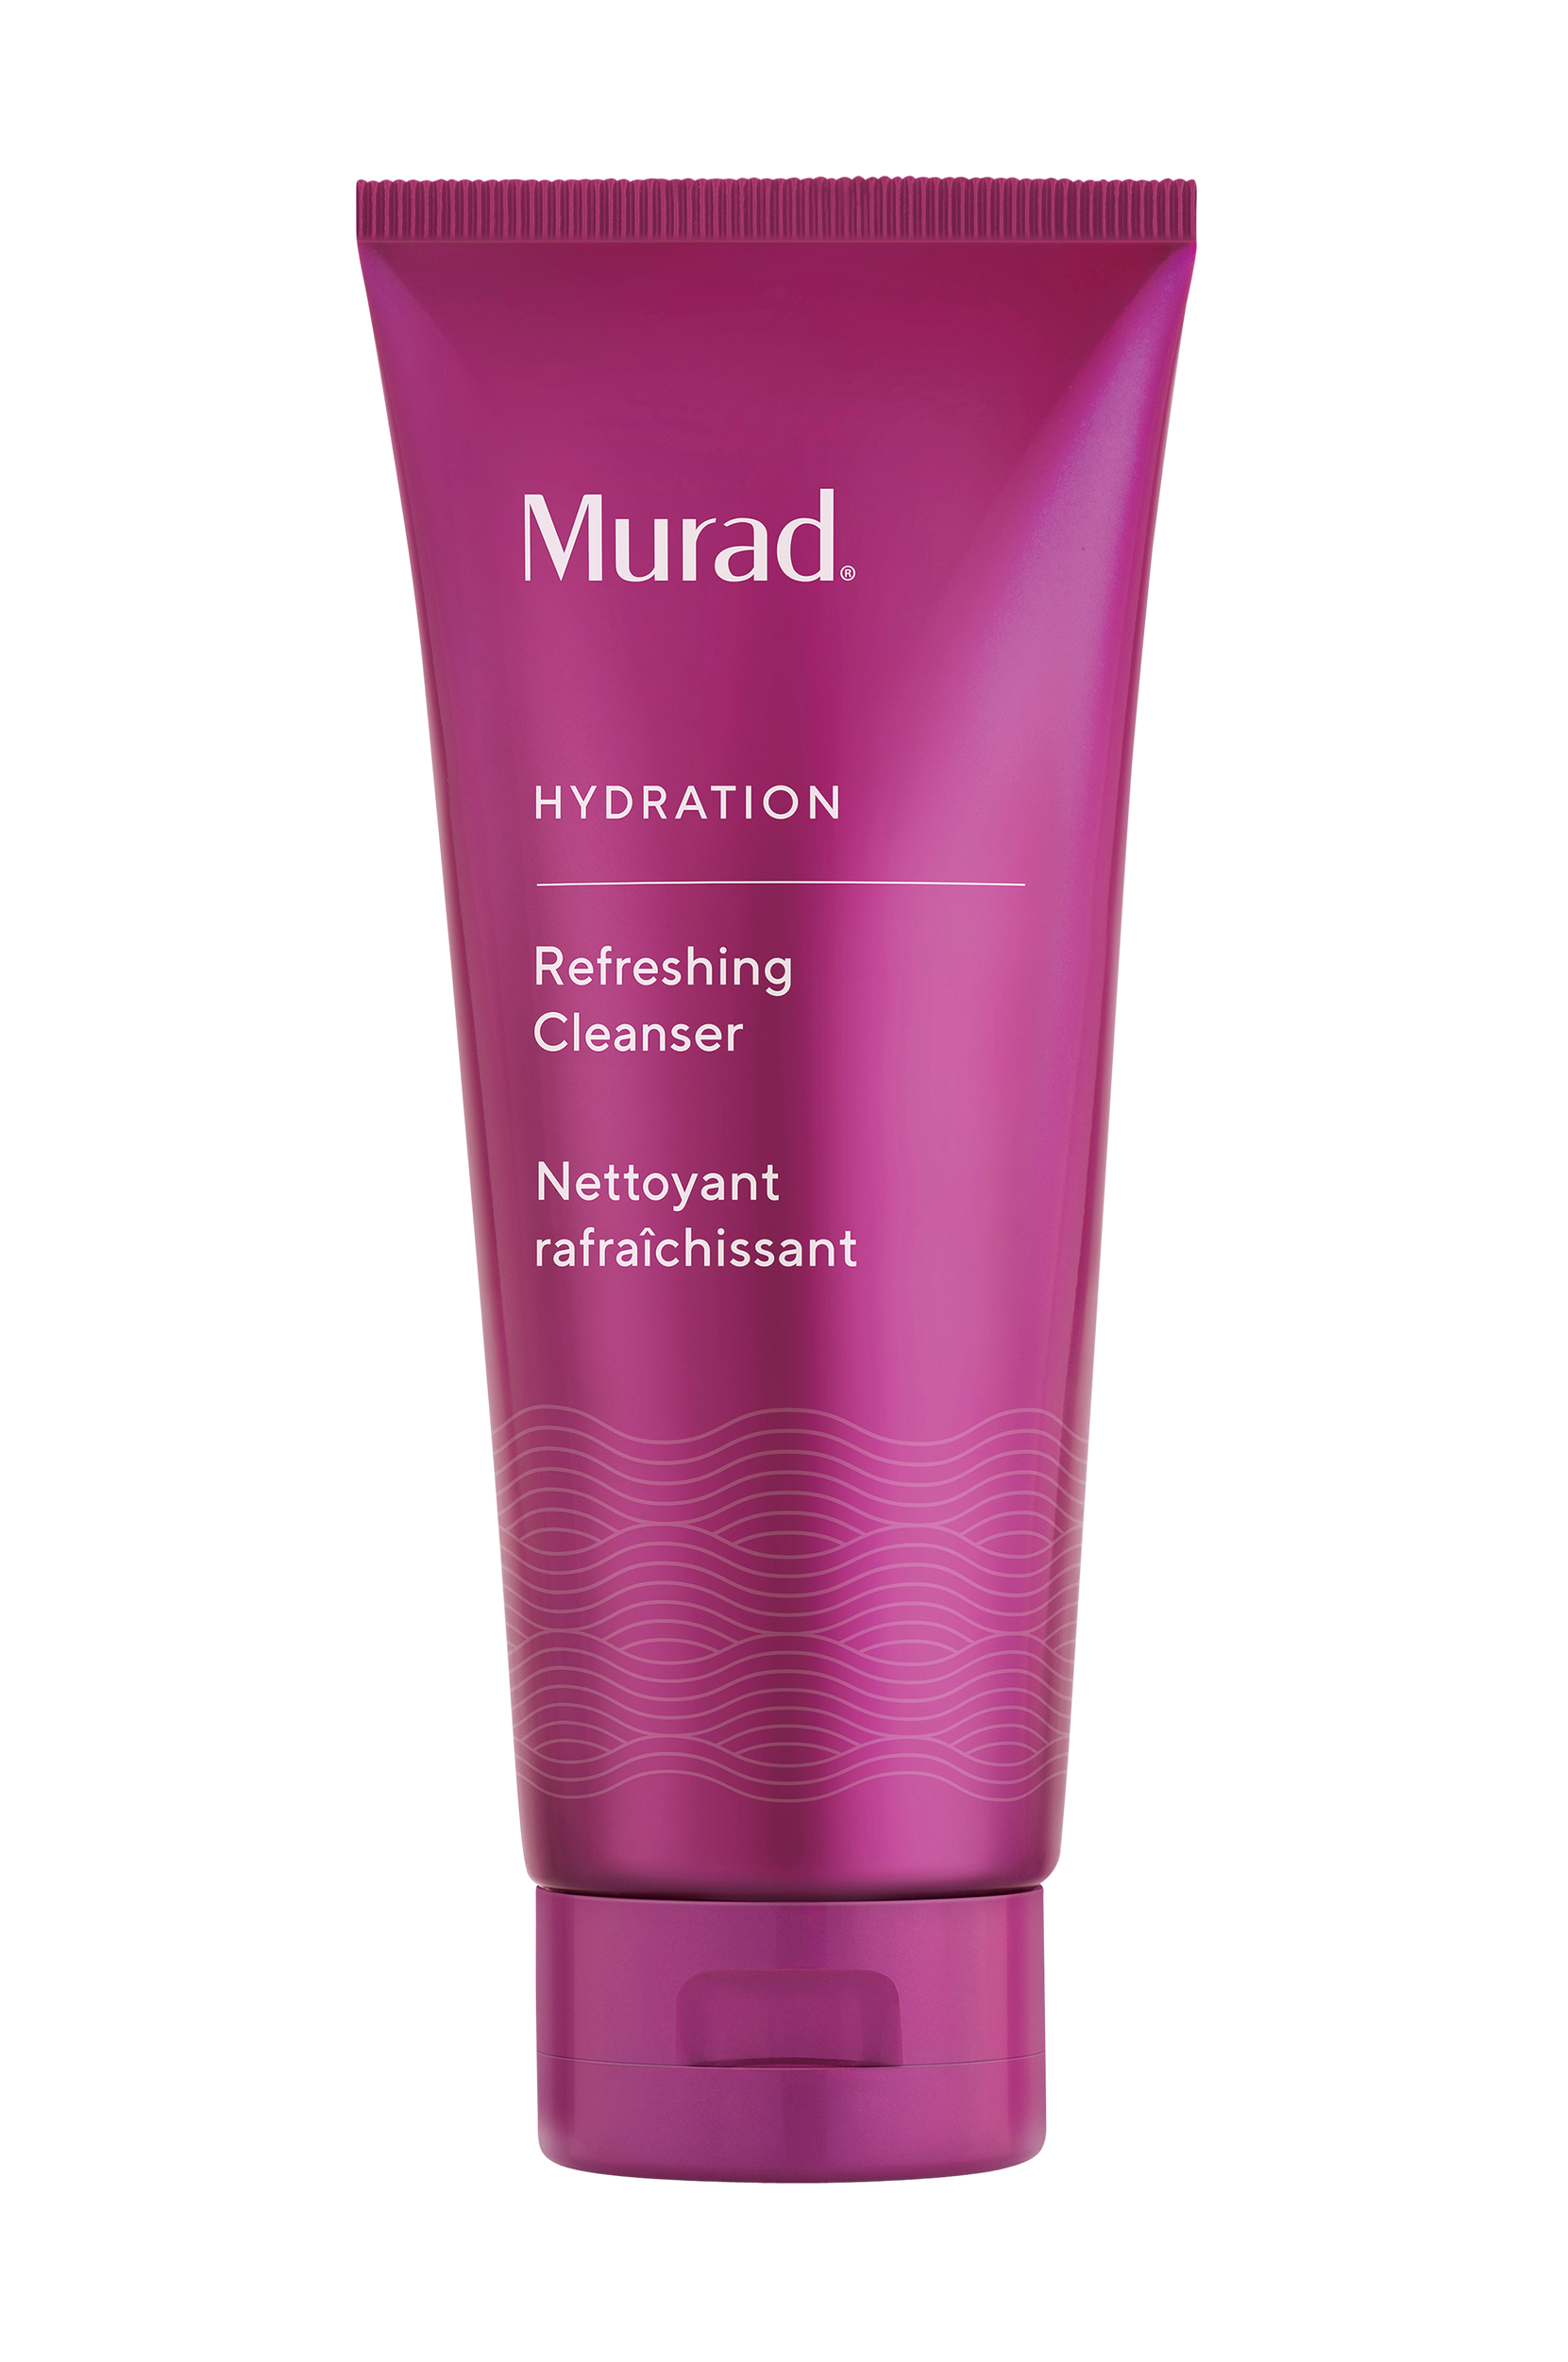 Hydration Refreshing Cleanser, Murad